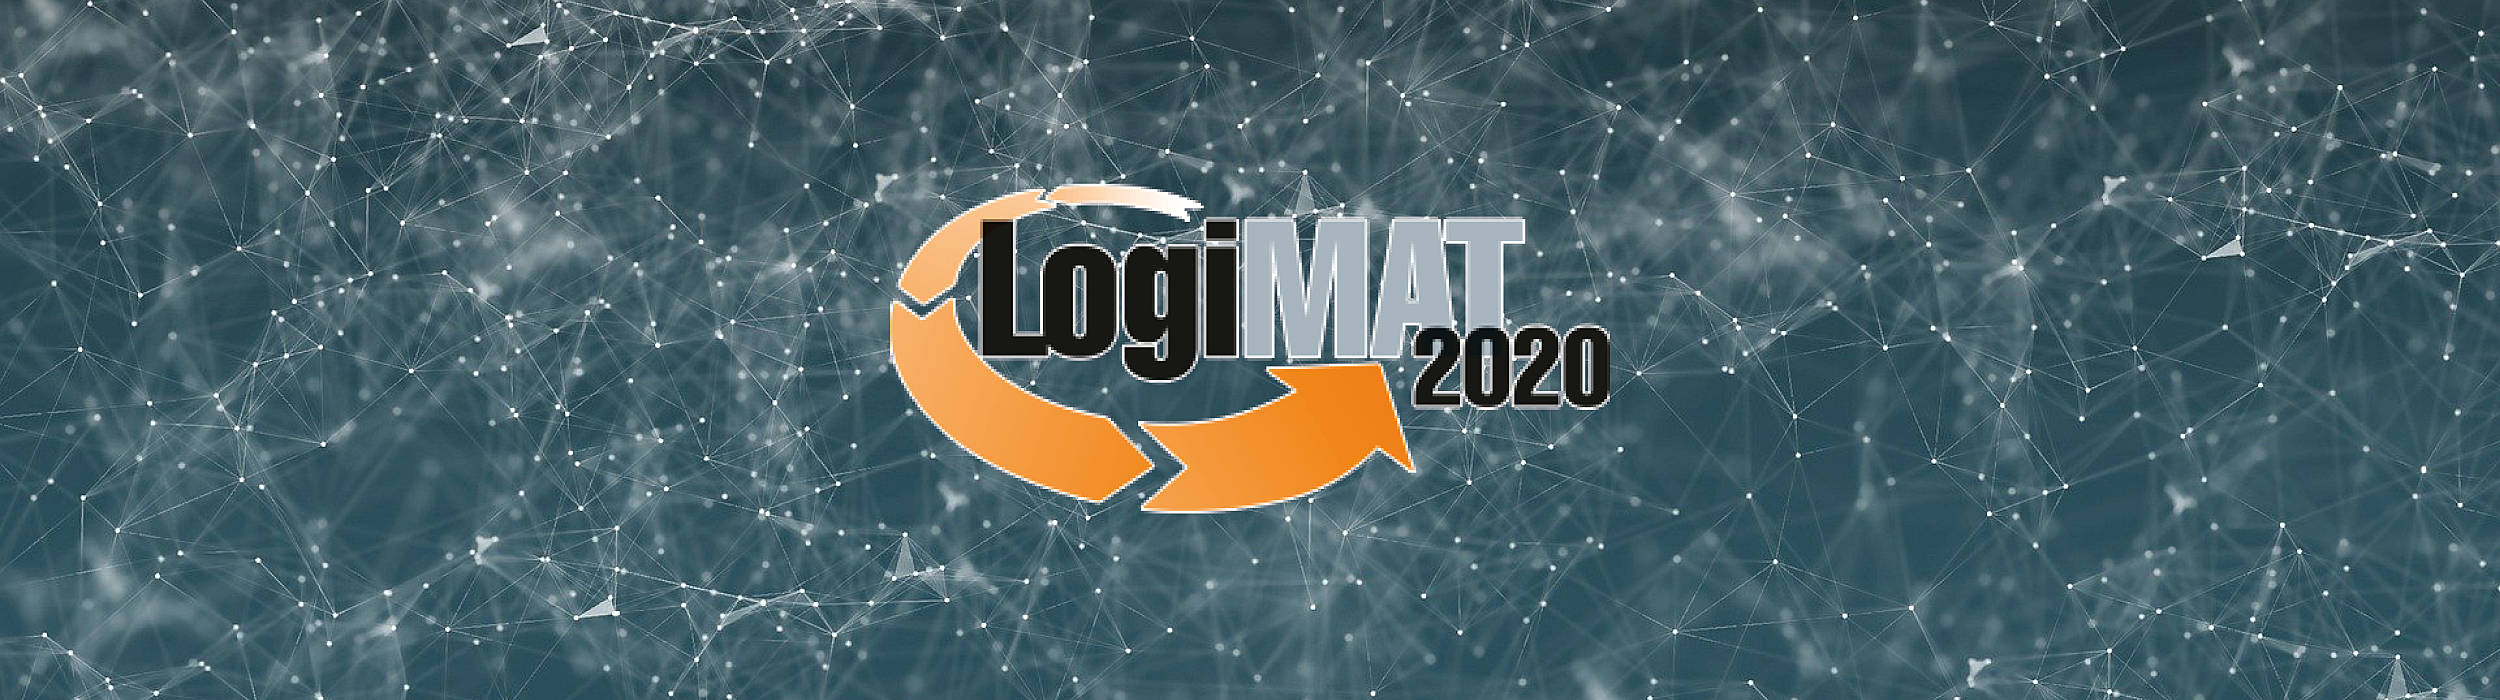 LogiMAT 2020 Toyota Material Handling